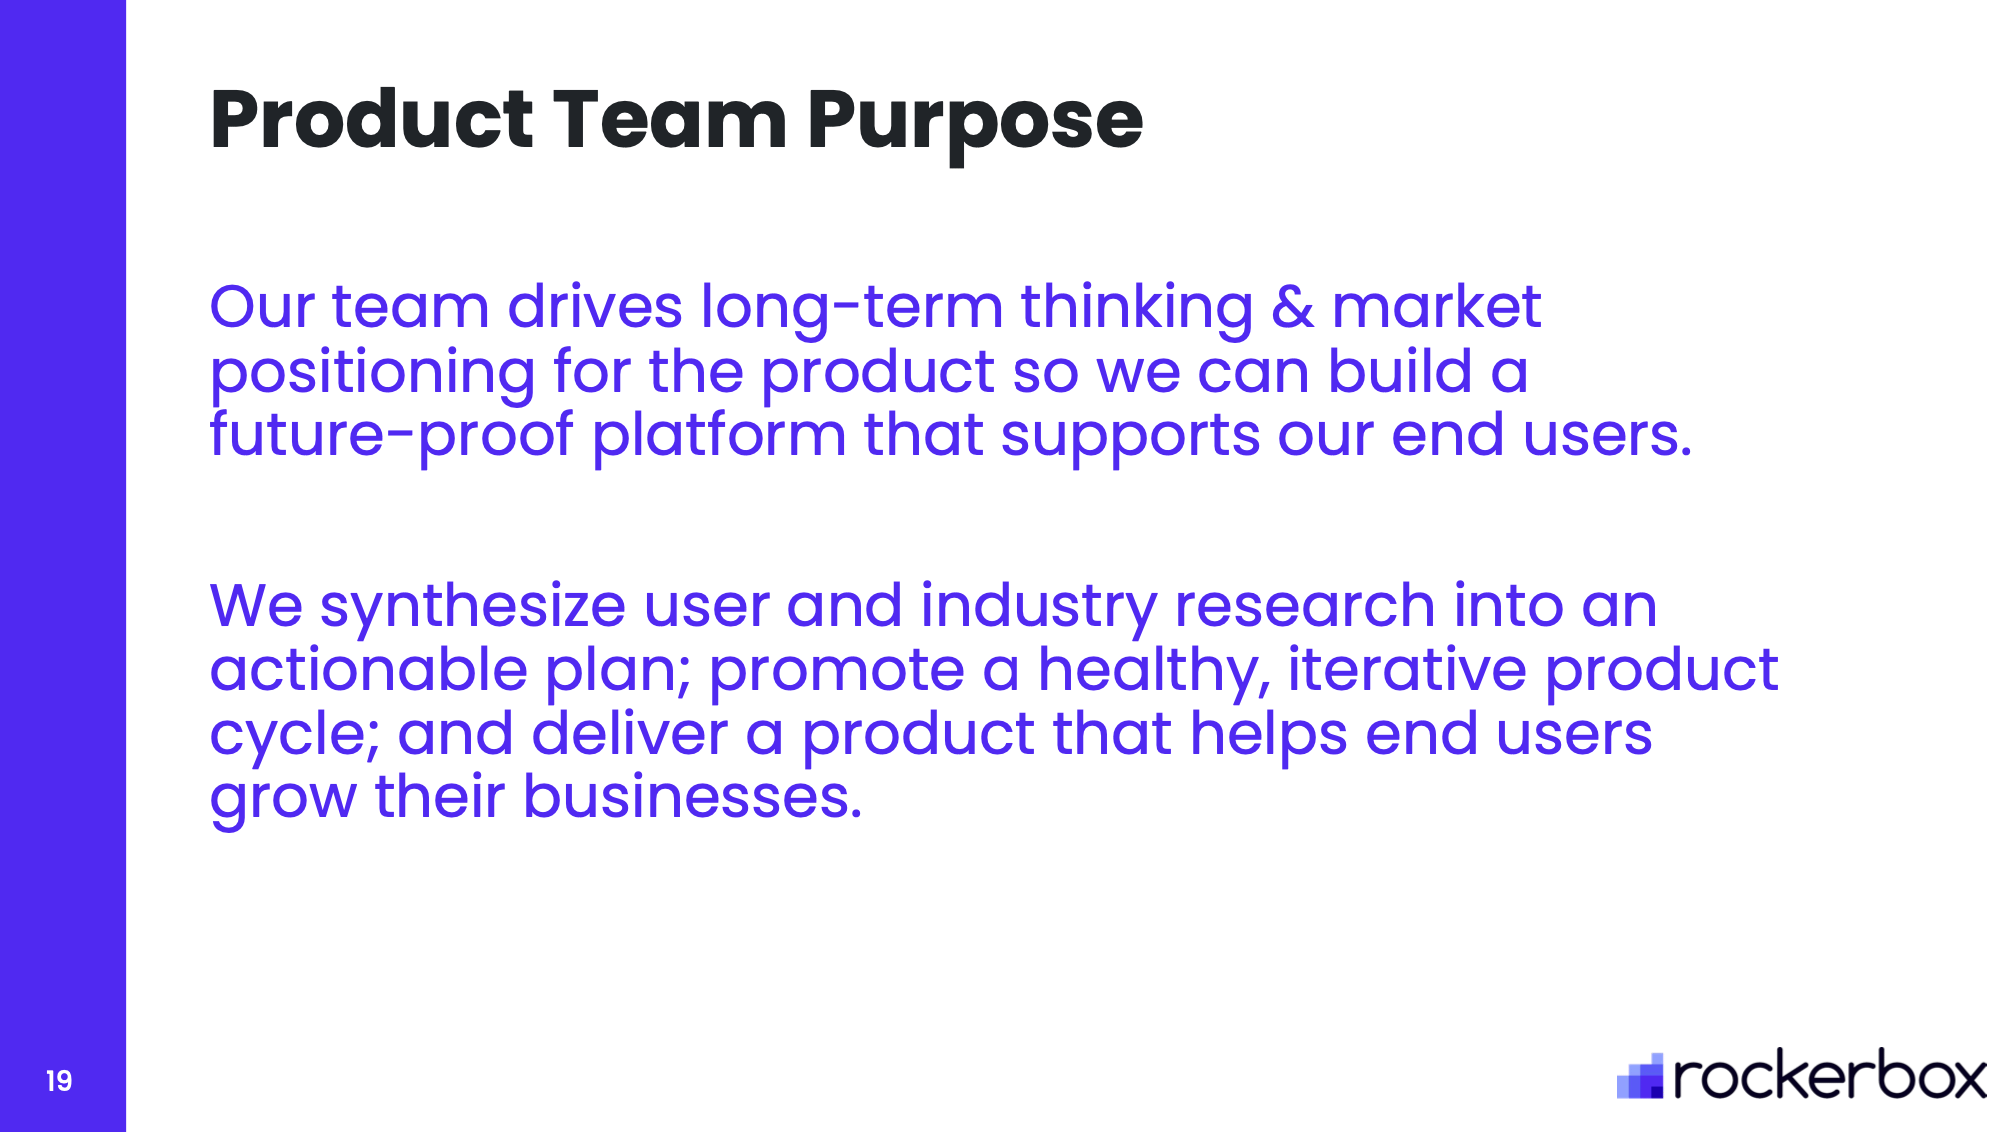 Product Team Purpose Statement